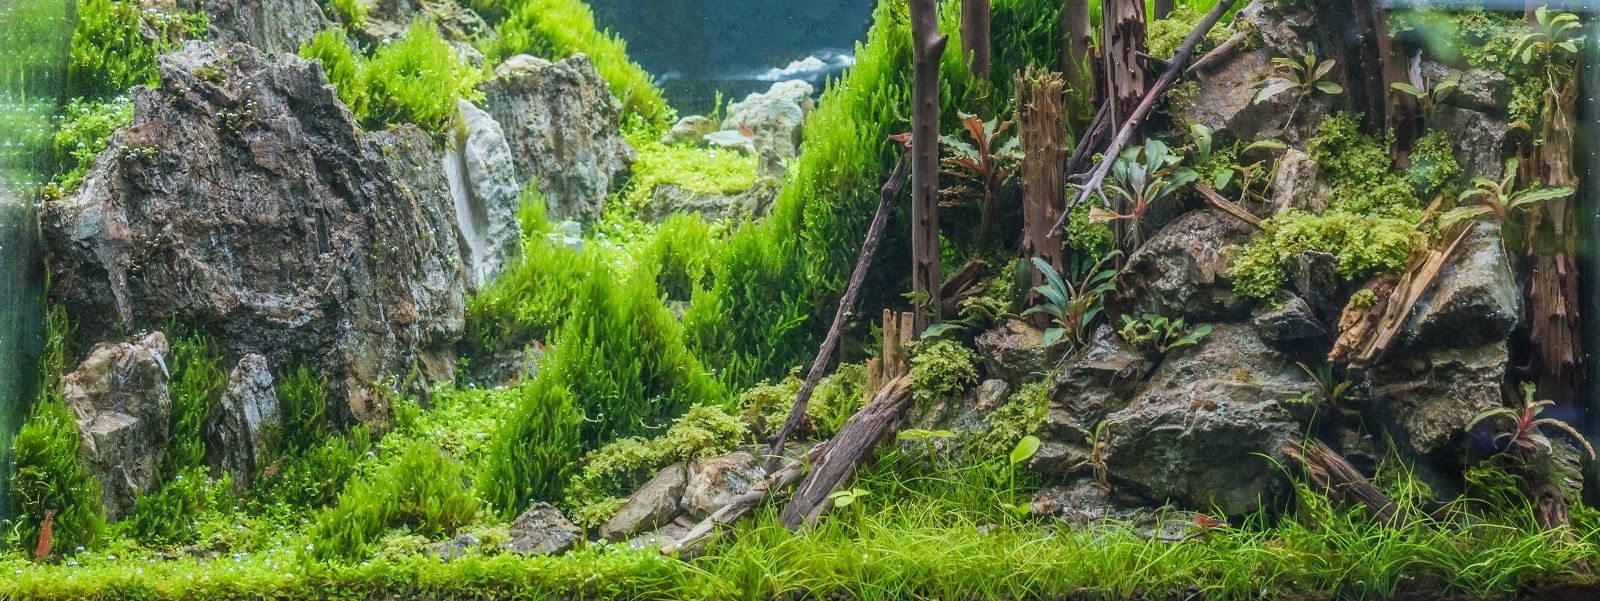 Aquascape aquarium with rocks, plants and moss.